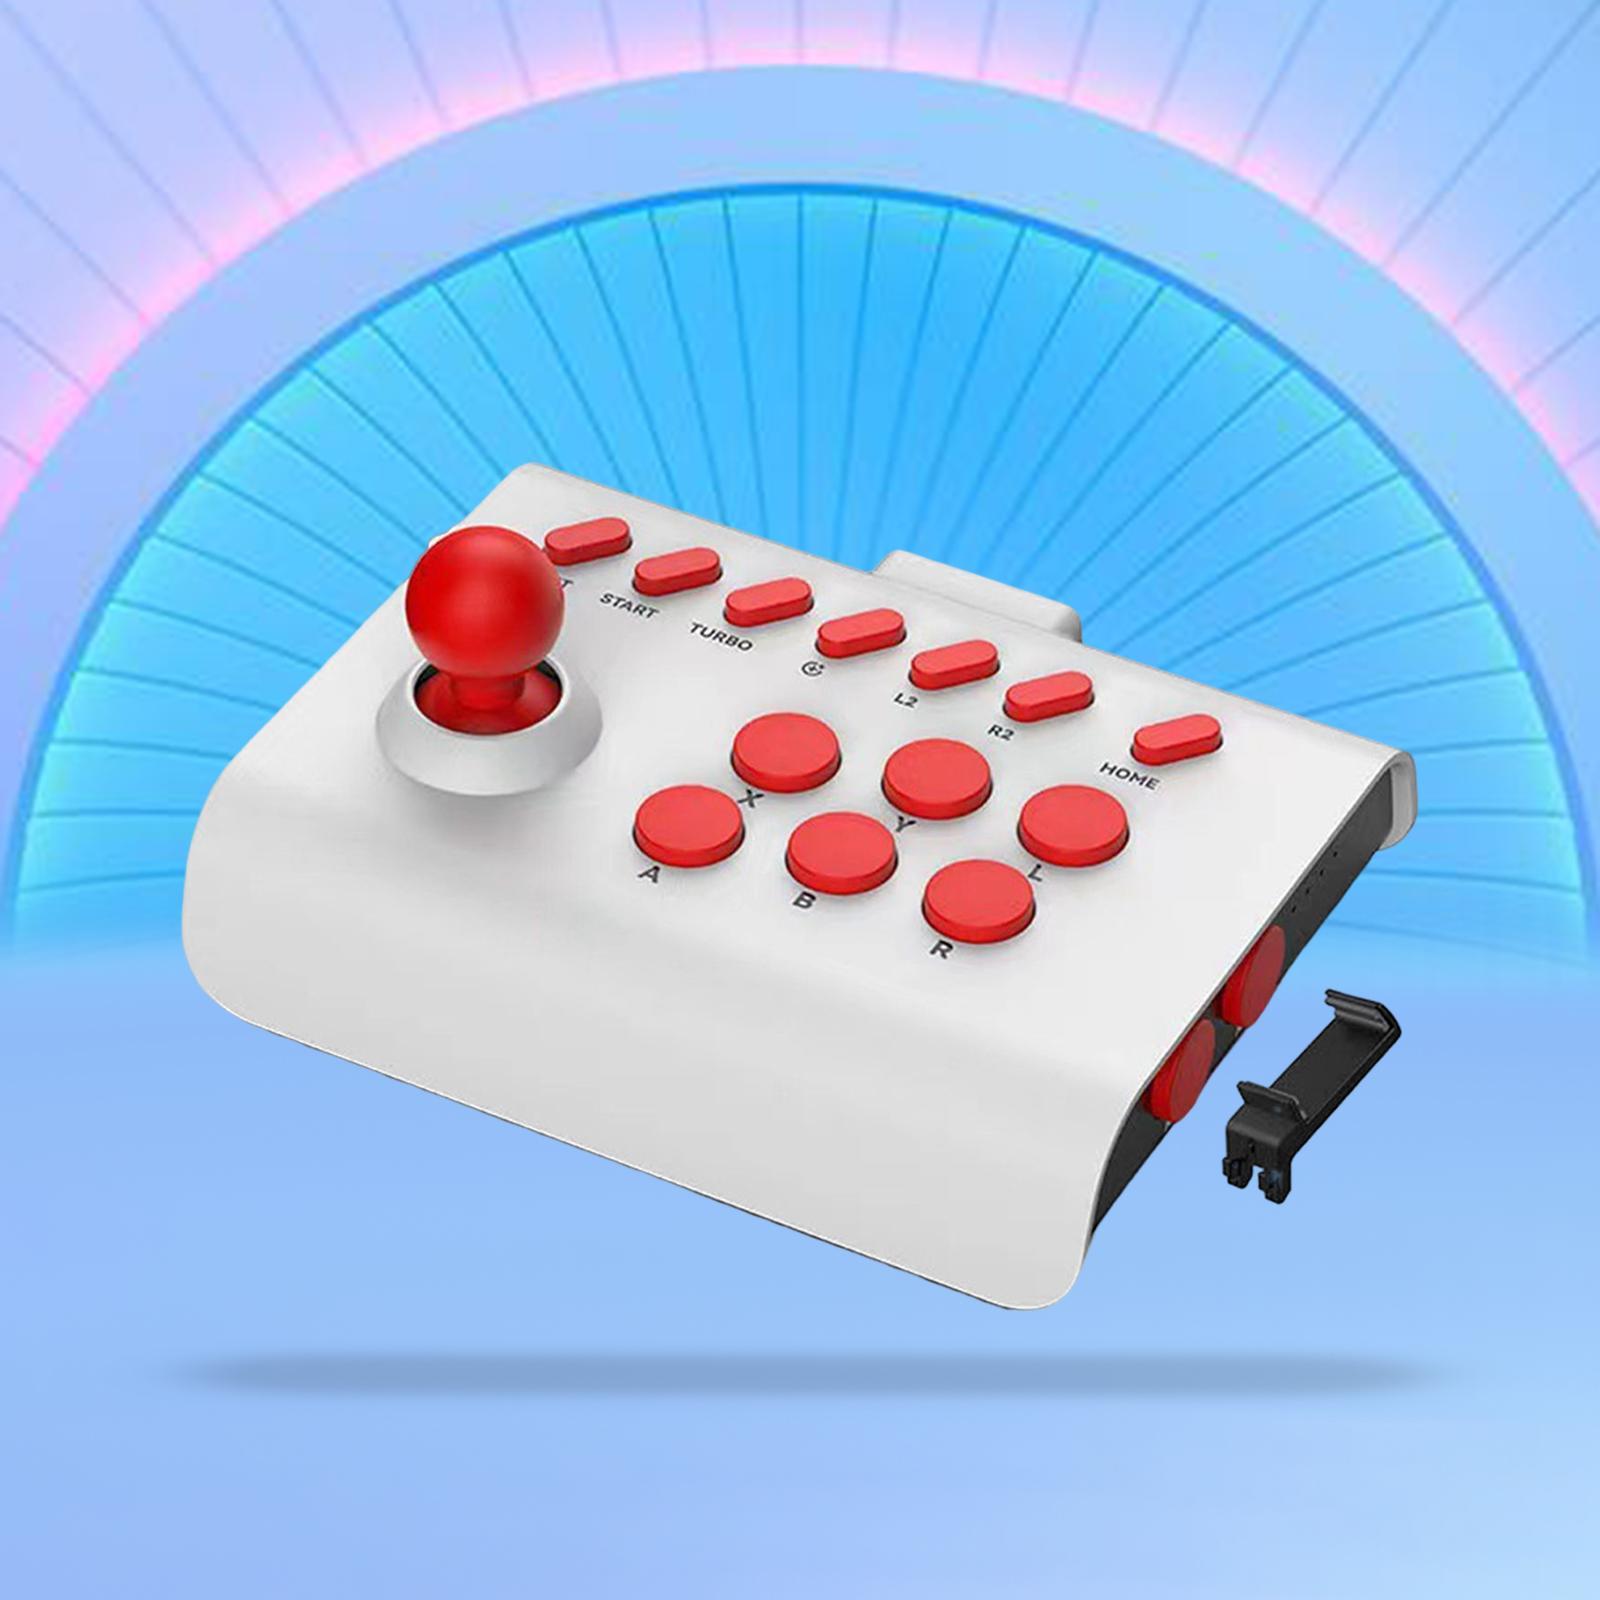 Arcade Rocker Game Joystick 13 Buttons for Game Console Smartphones Computer